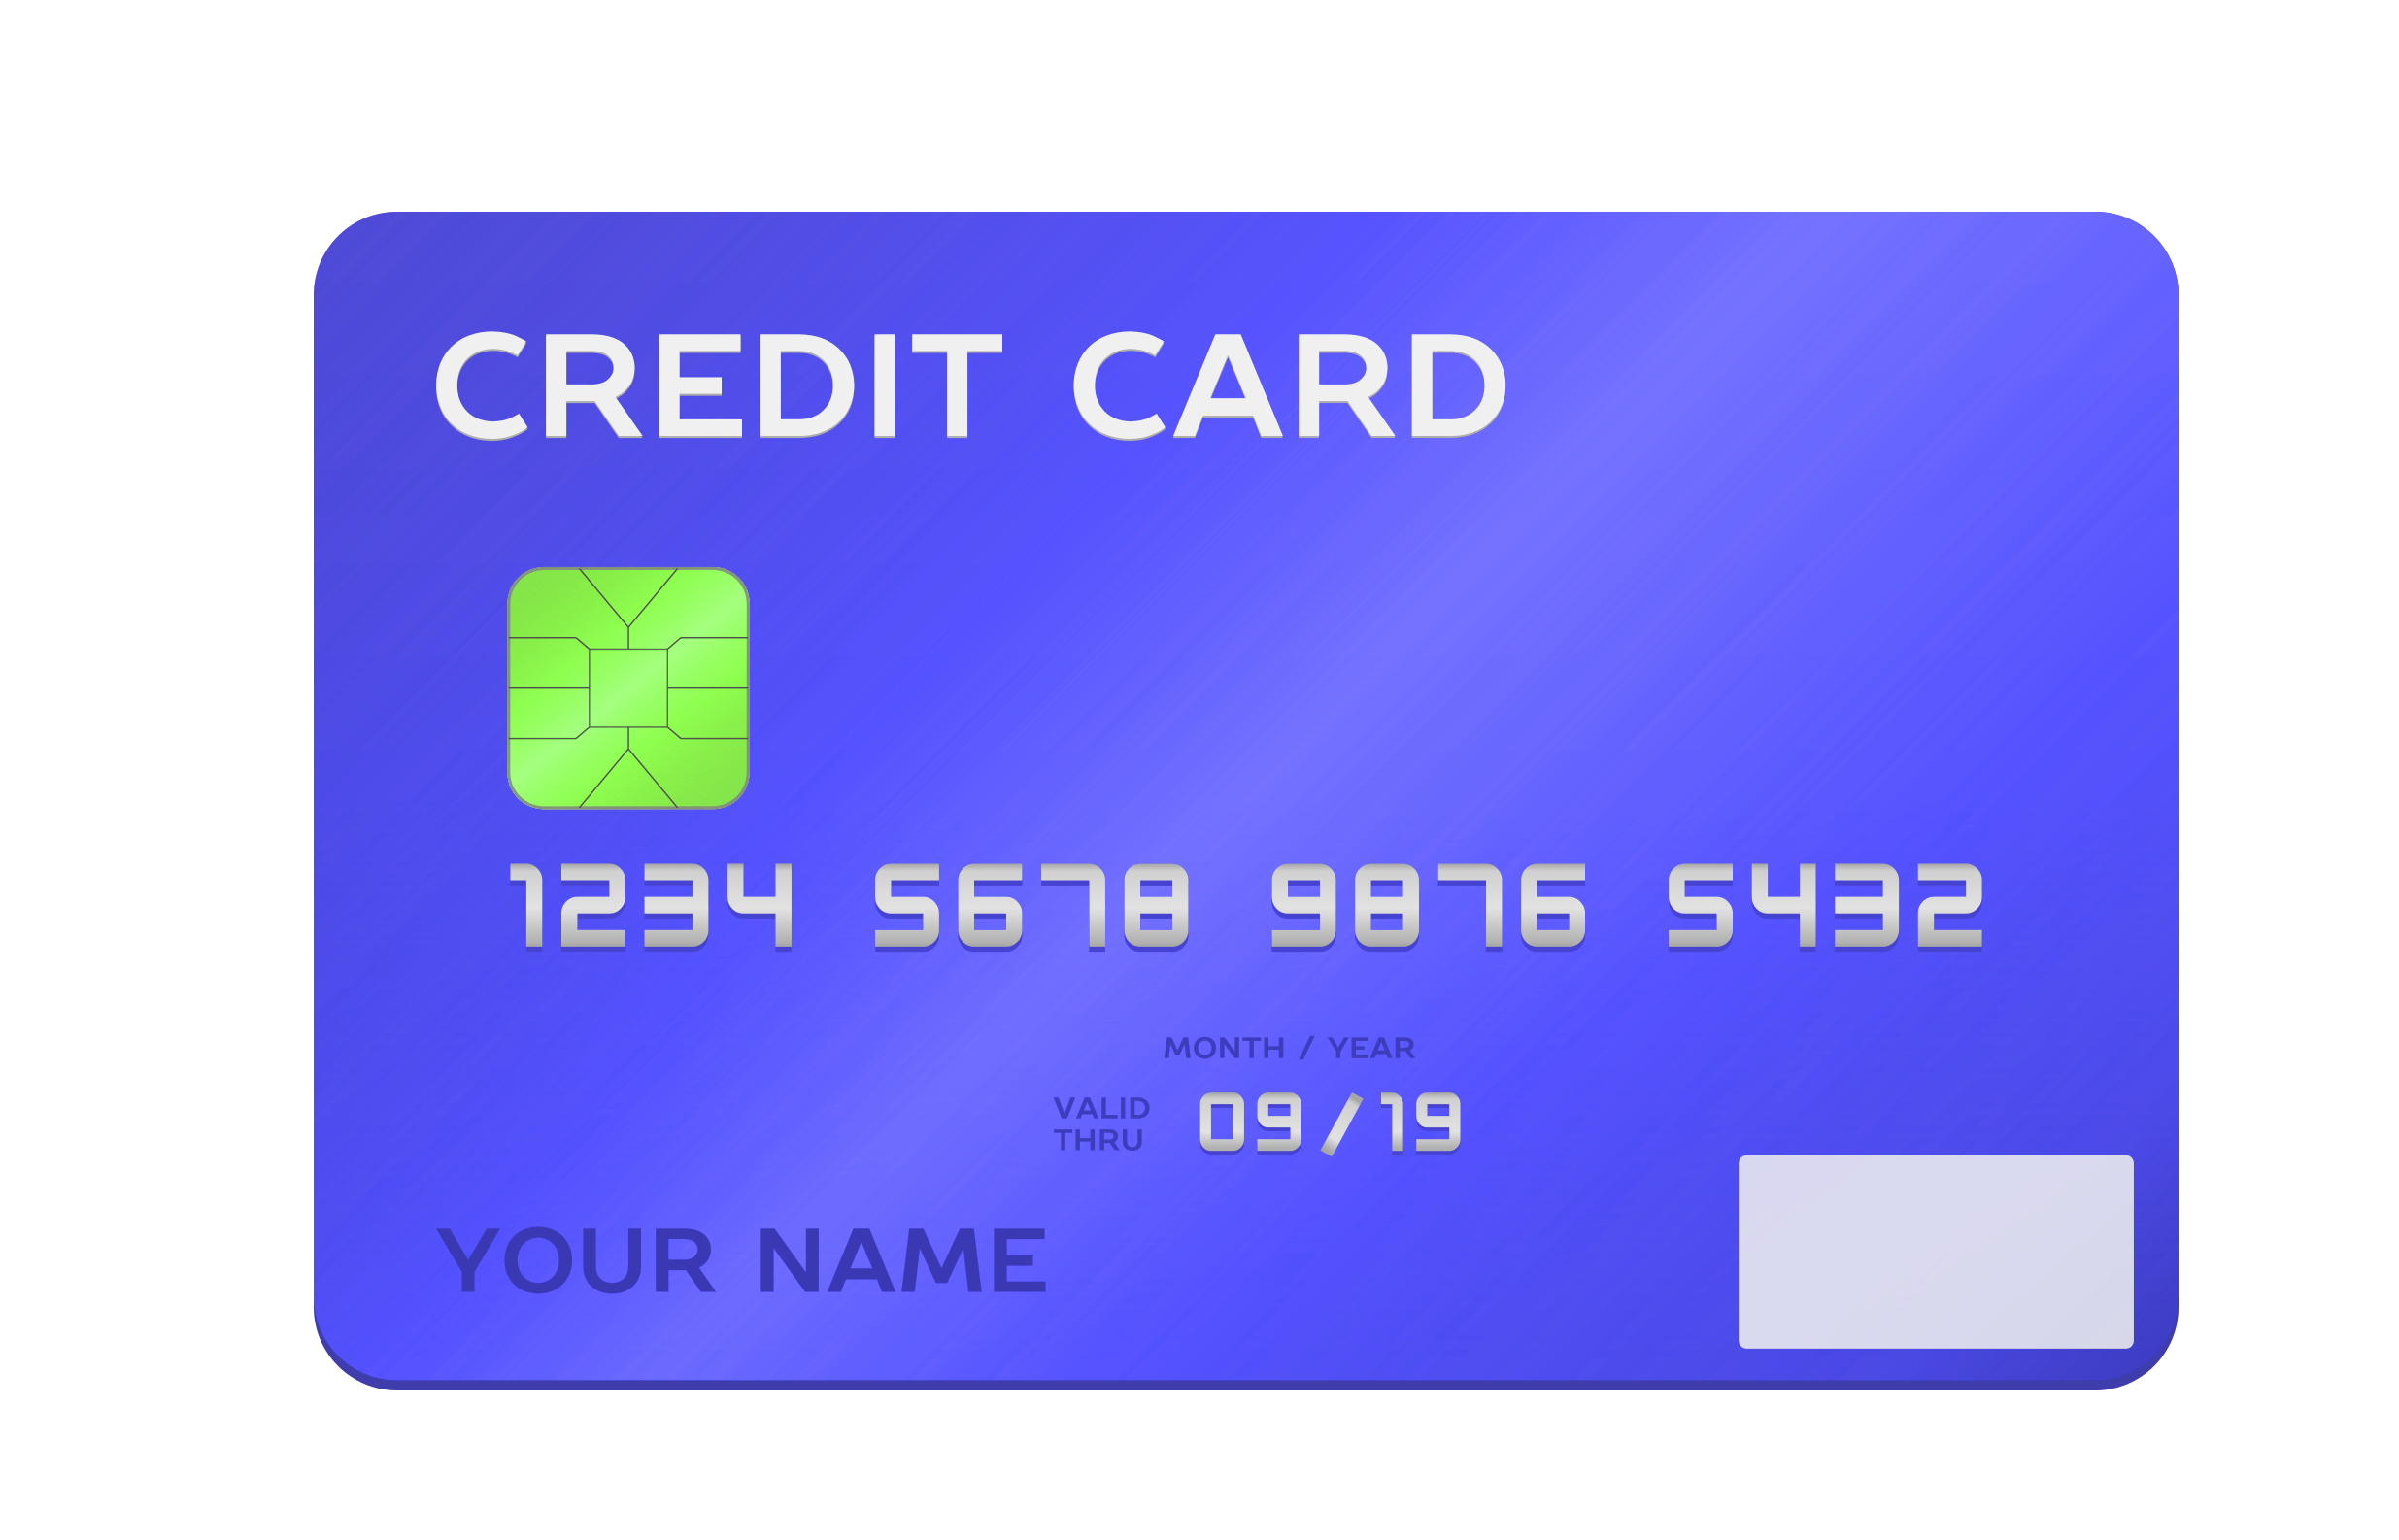 Credit Card PNG Picture pngteam.com